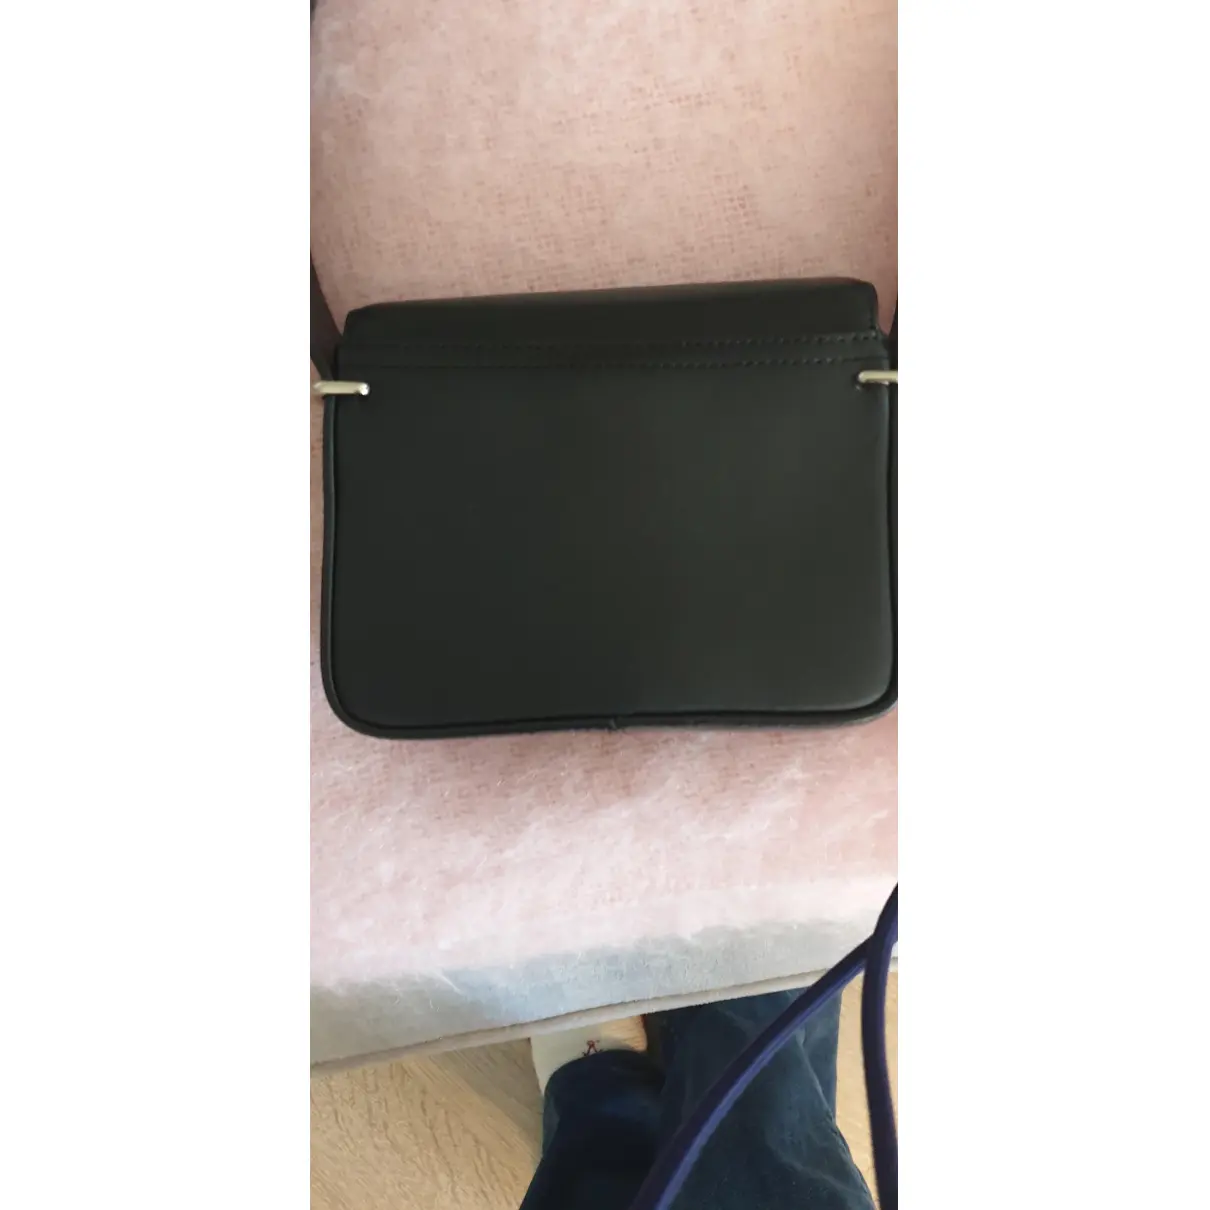 Buy 3.1 Phillip Lim Alix leather handbag online